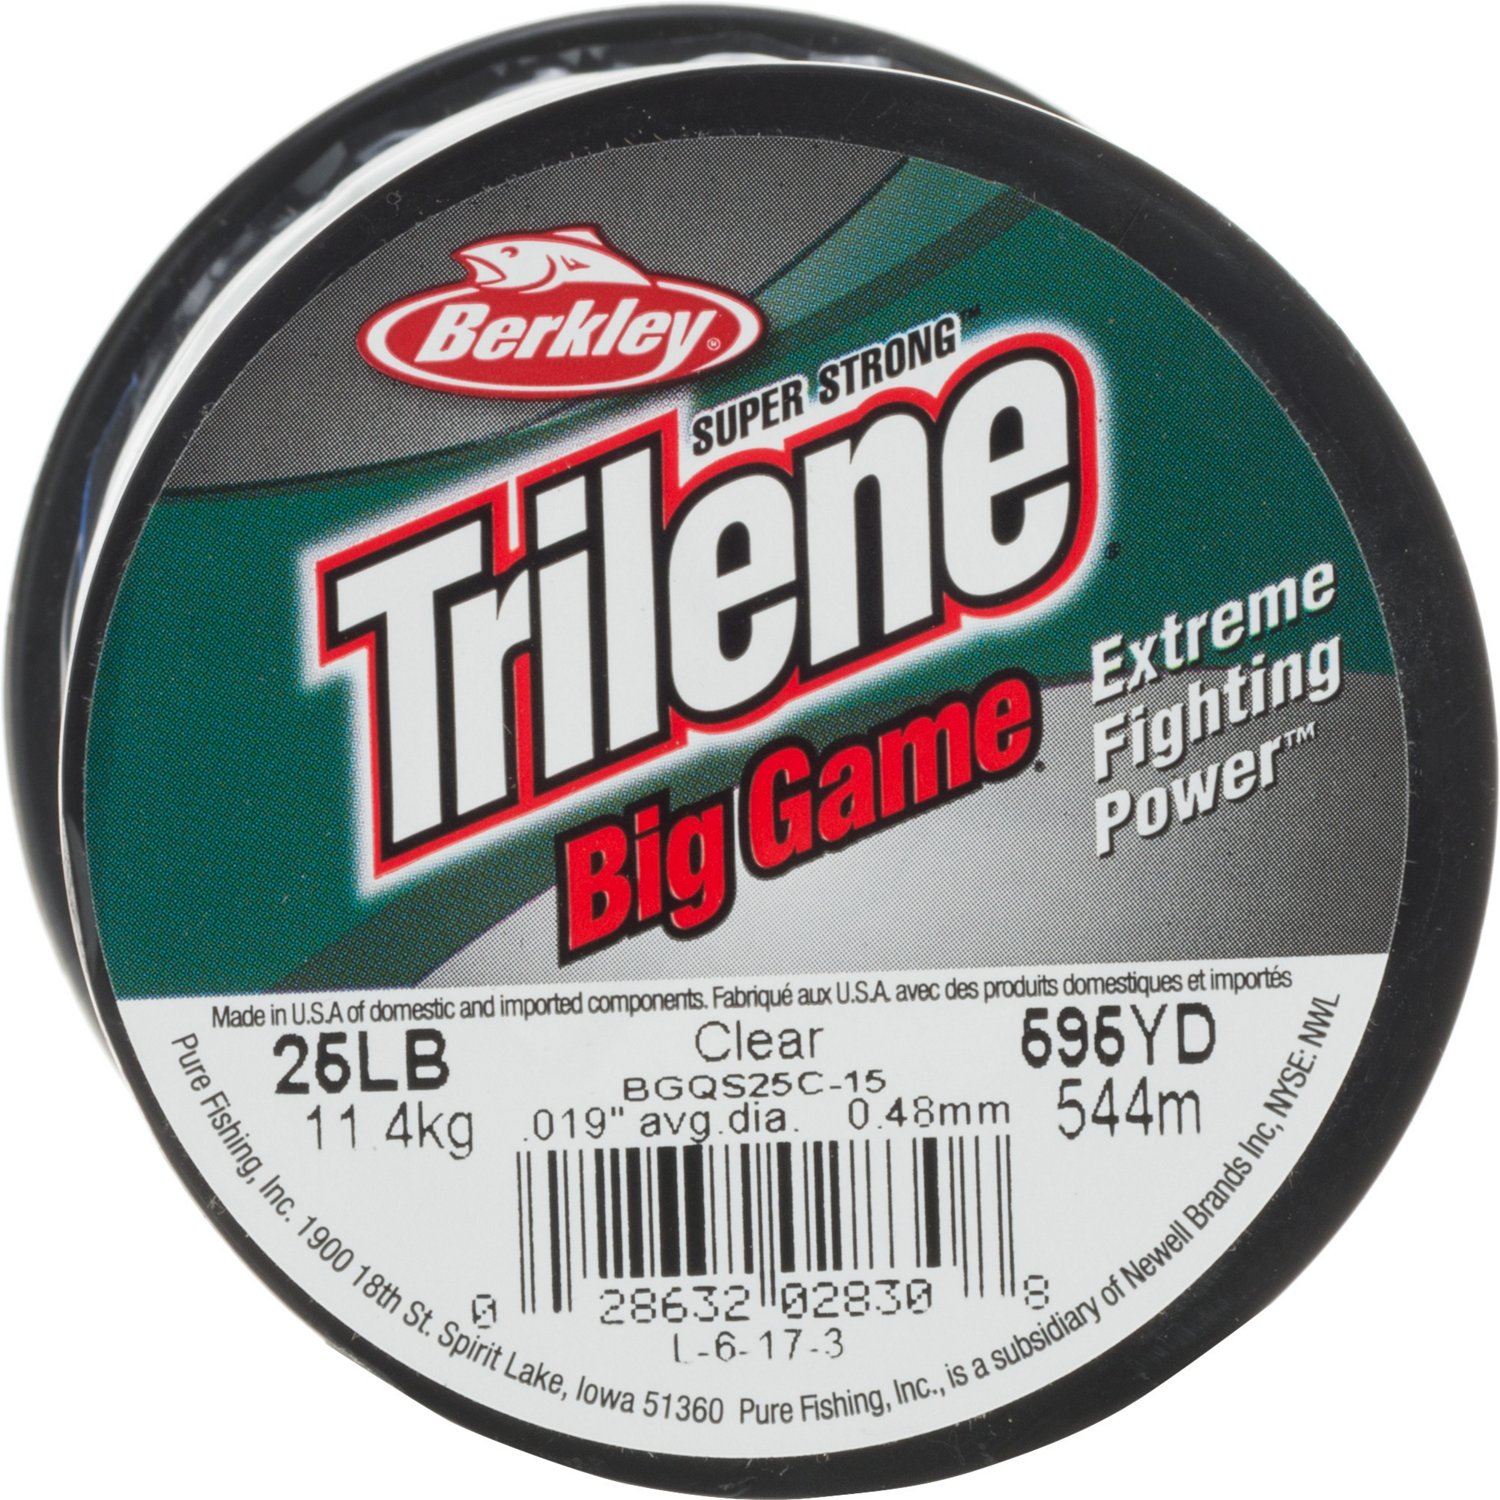 Berkley Trilene Big Game Steel Blue Fishing Line Spool - 15 LB